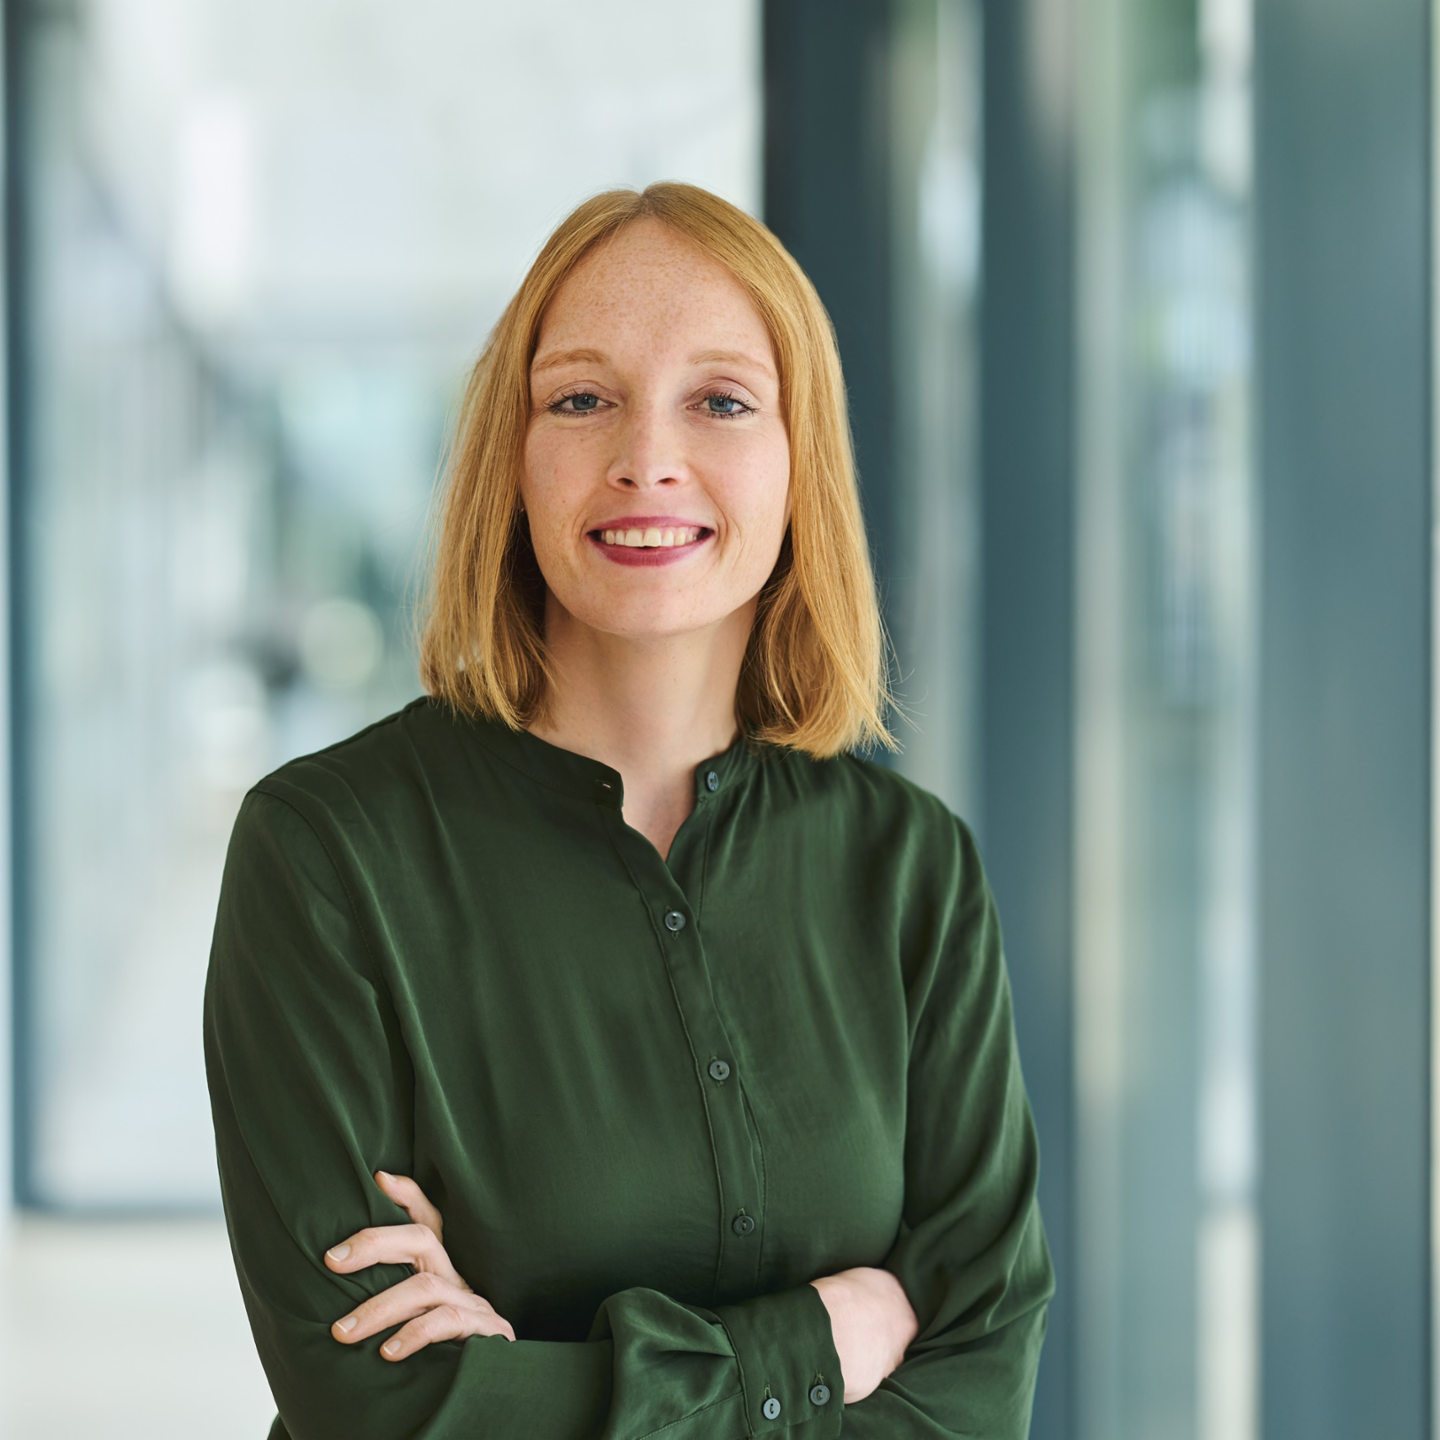 A portrait photo shows Michaela Homann, Head of Customer Communications at EOS Technology Solutions